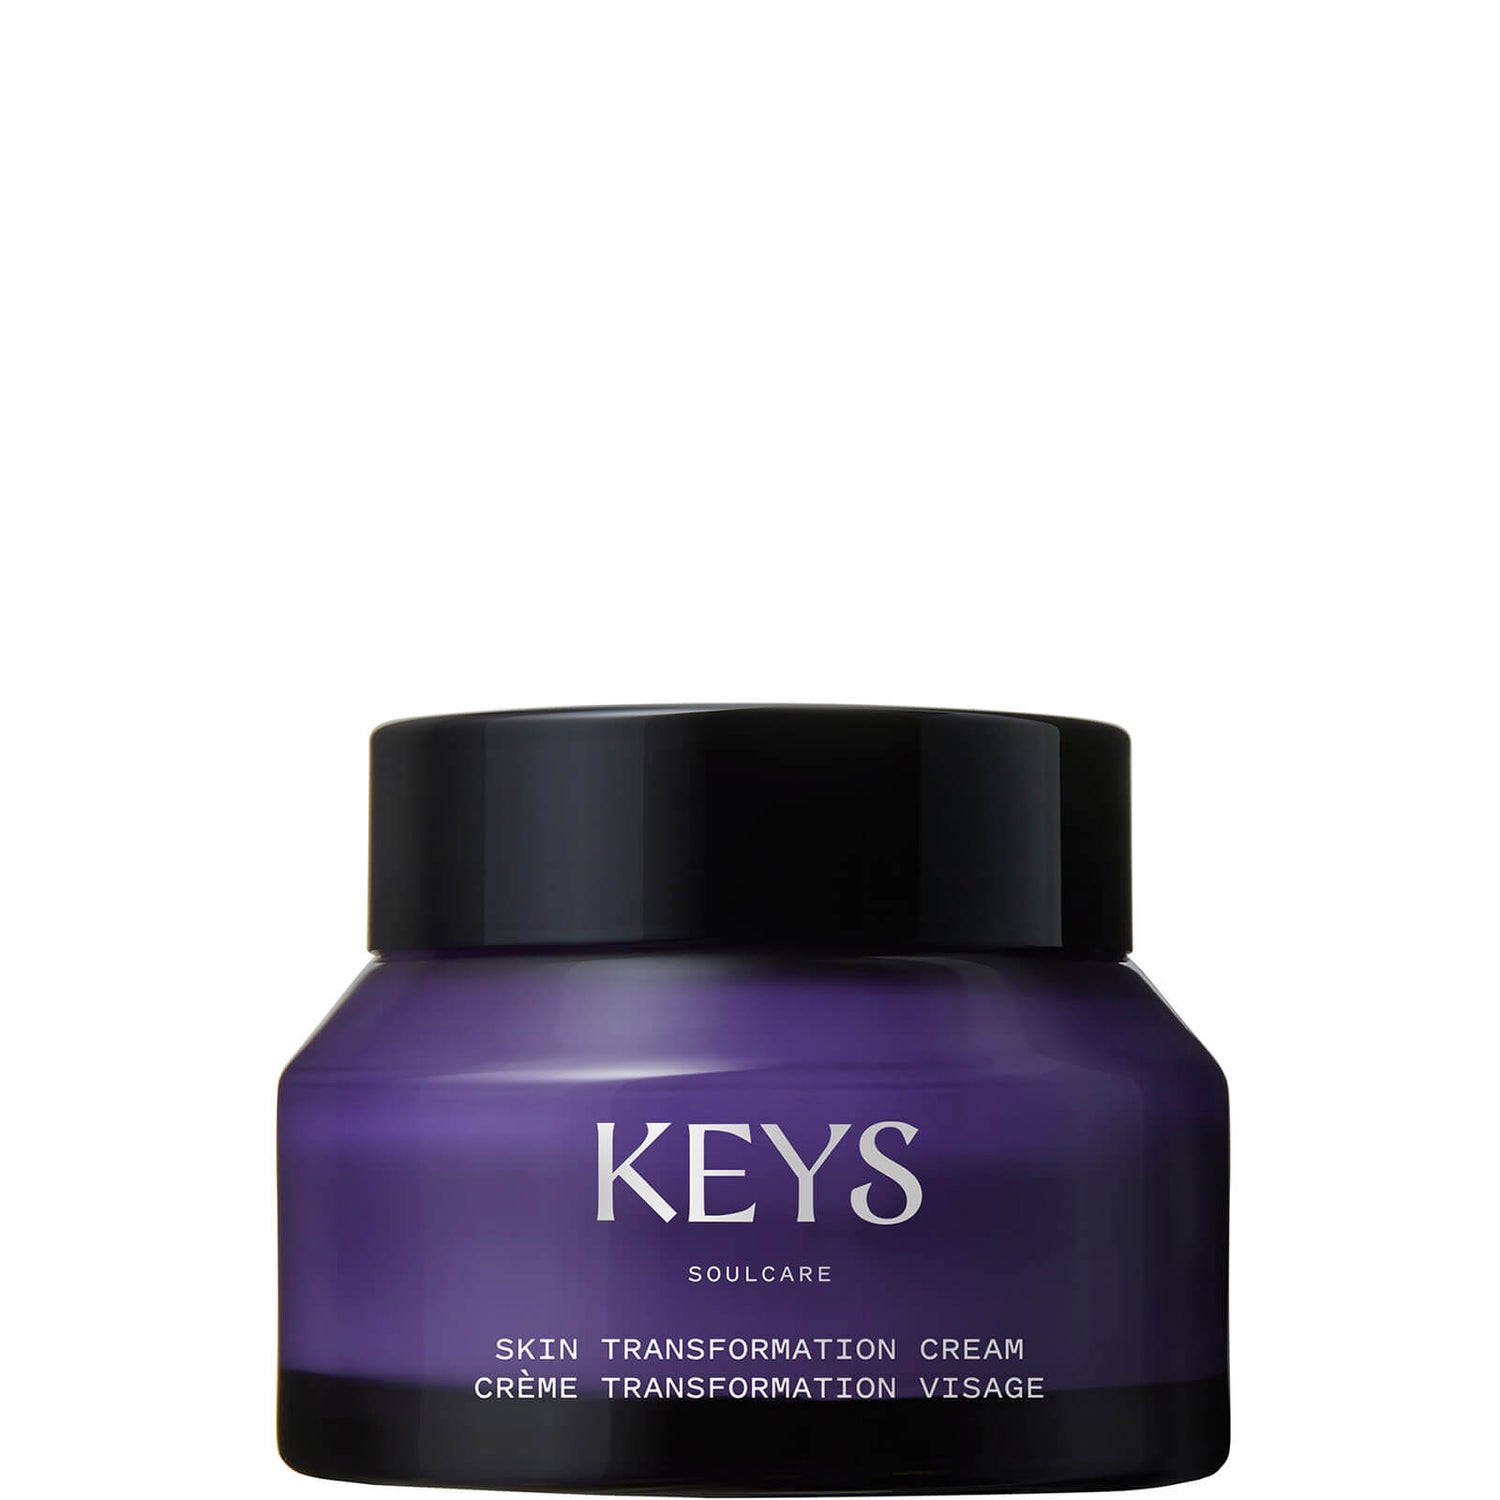 Keys Soulcare Skin Transformation Cream - Fragrance Free